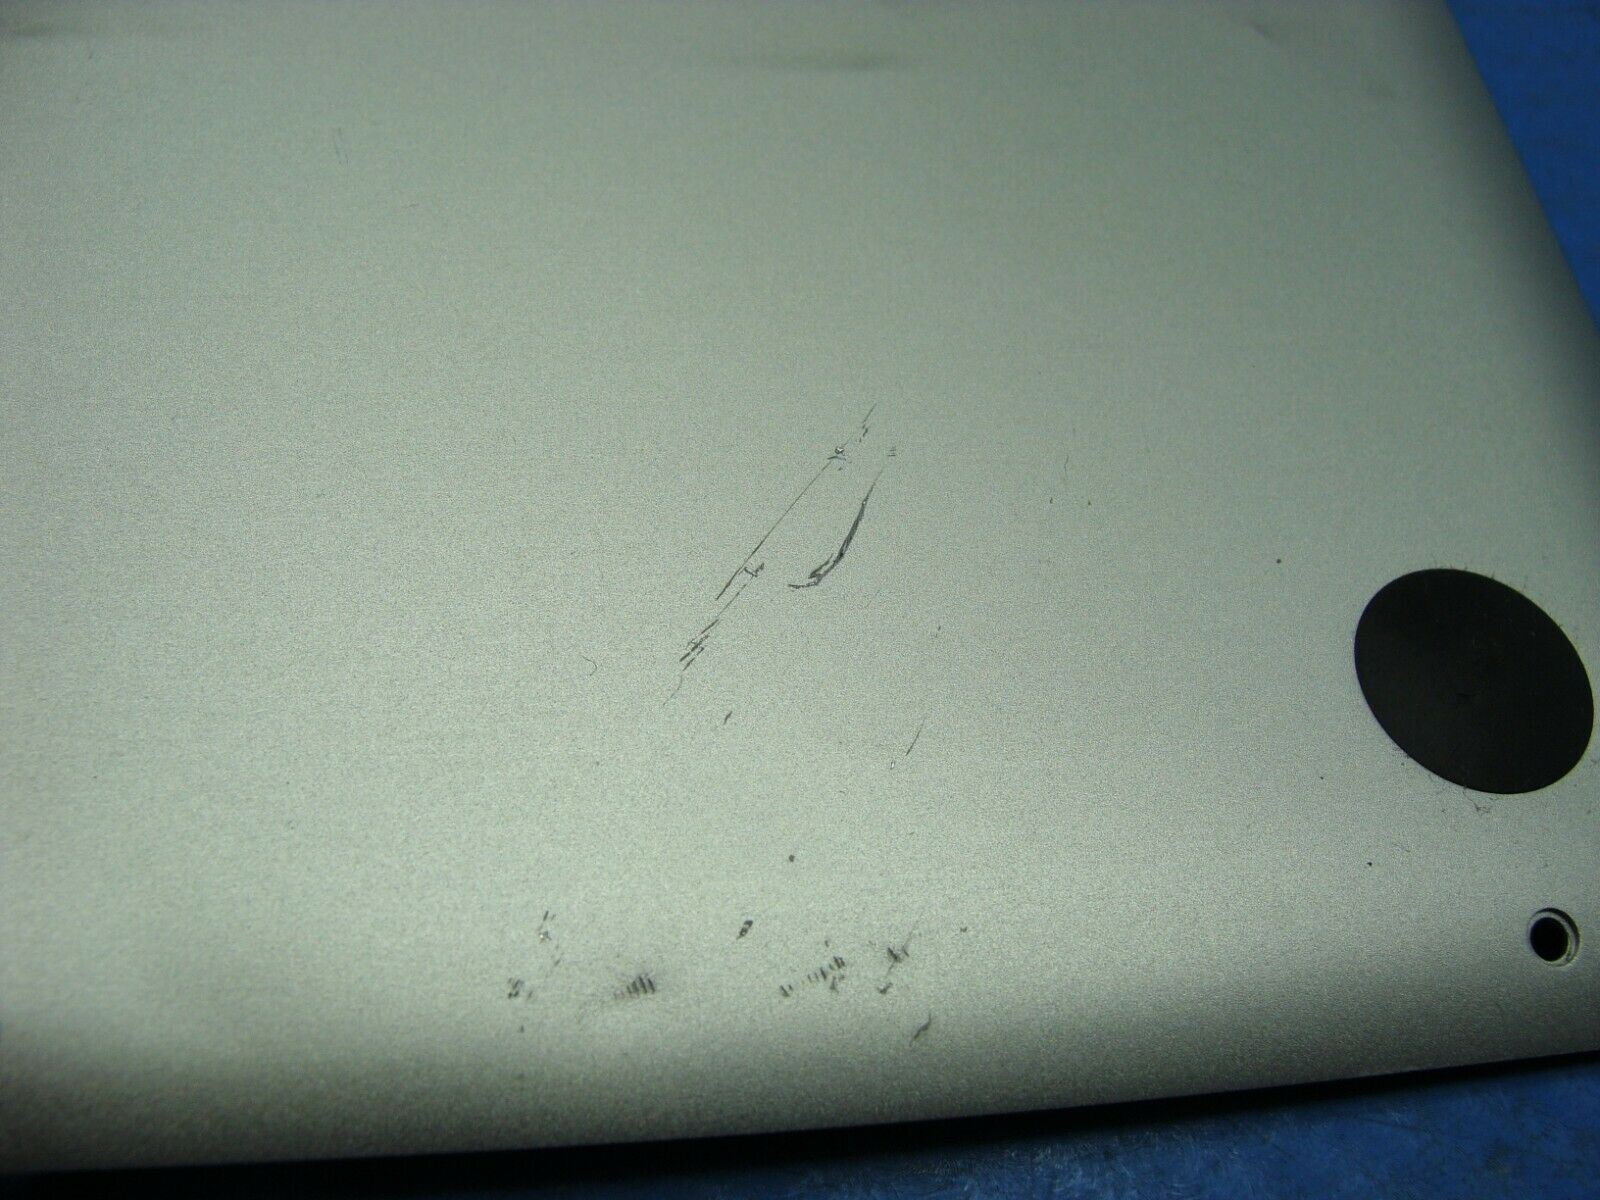 MacBook Pro A1278 MC374LL/A Early 2010 13